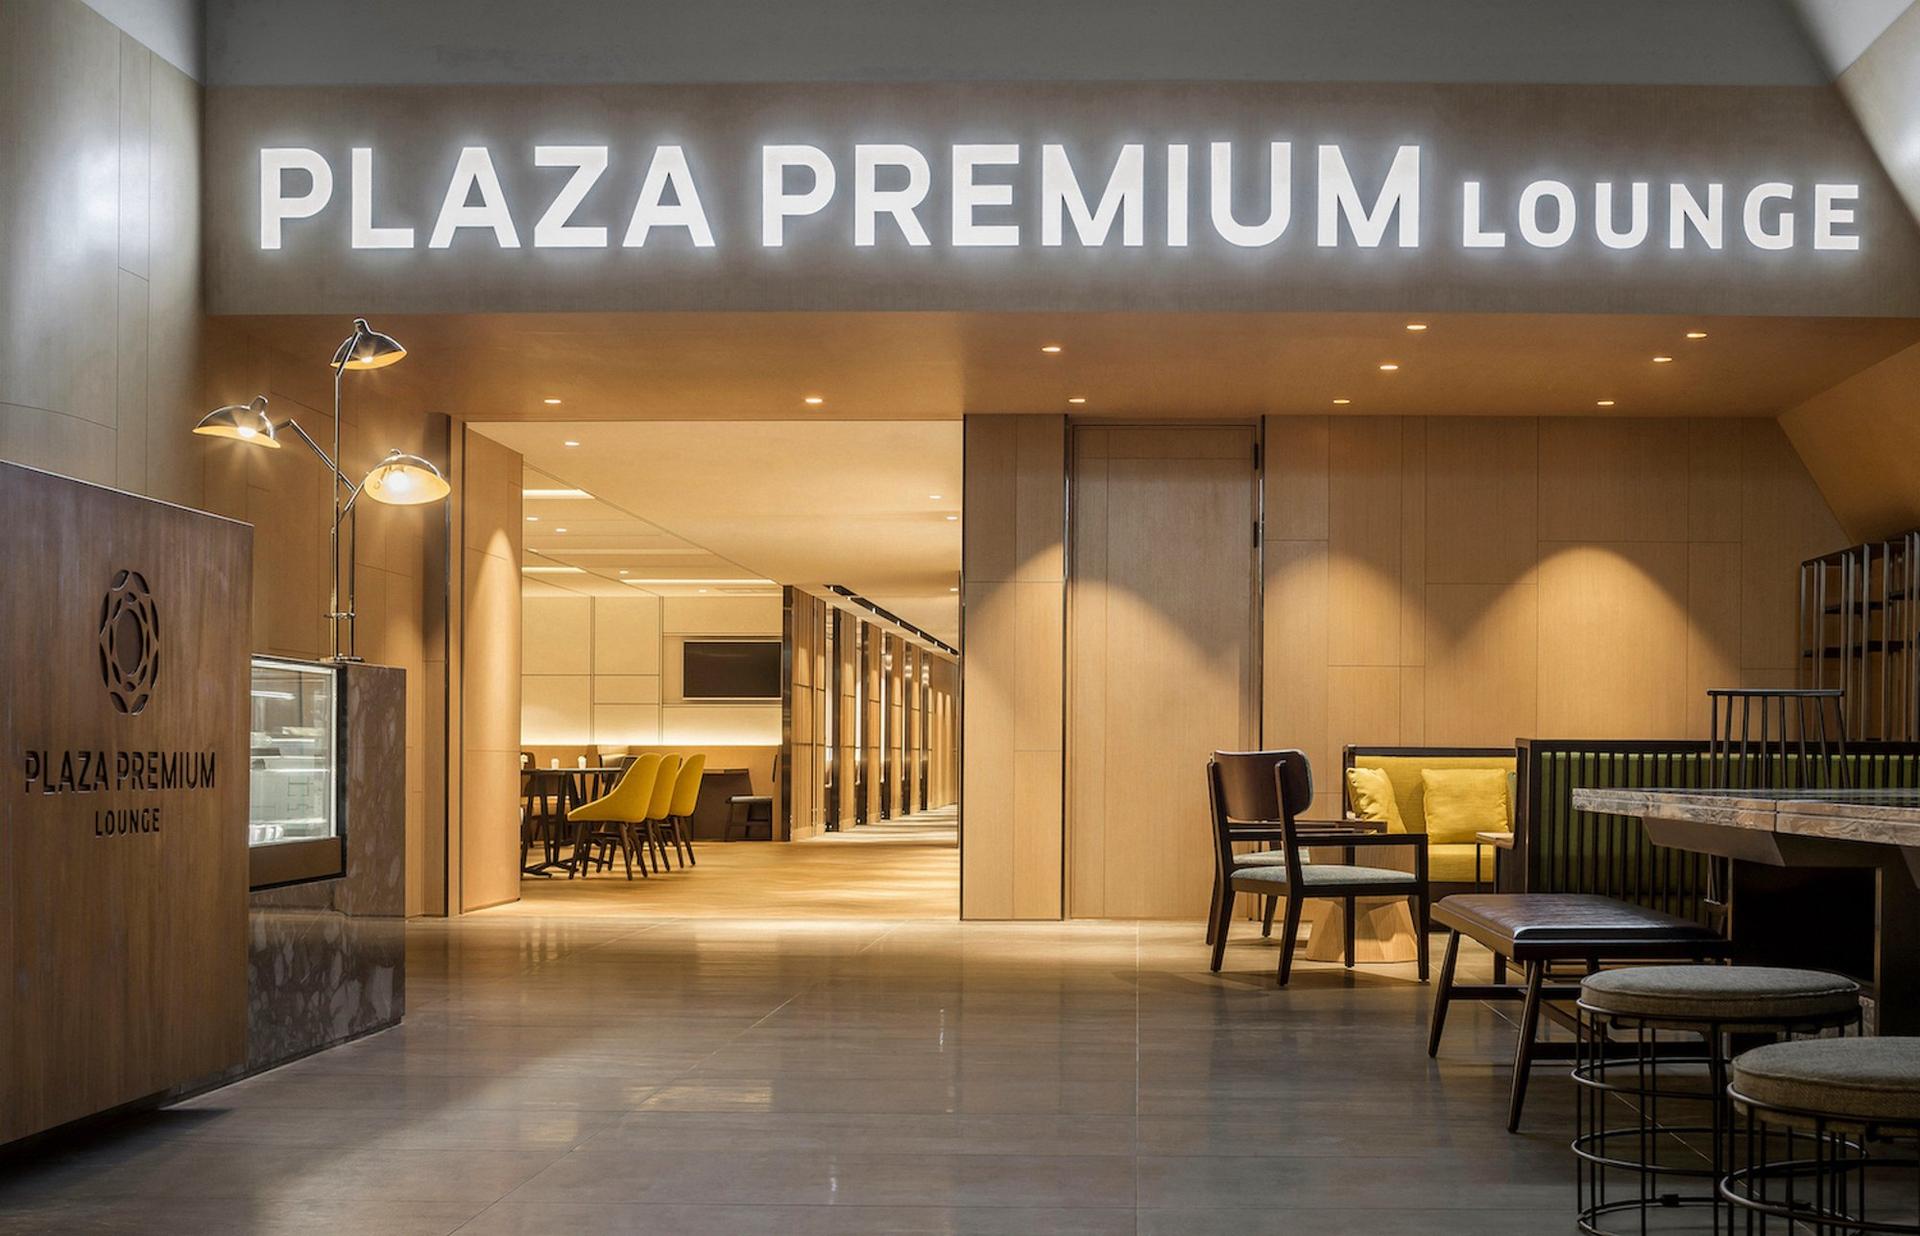 Plaza Premium Lounge (Zone A) image 60 of 99